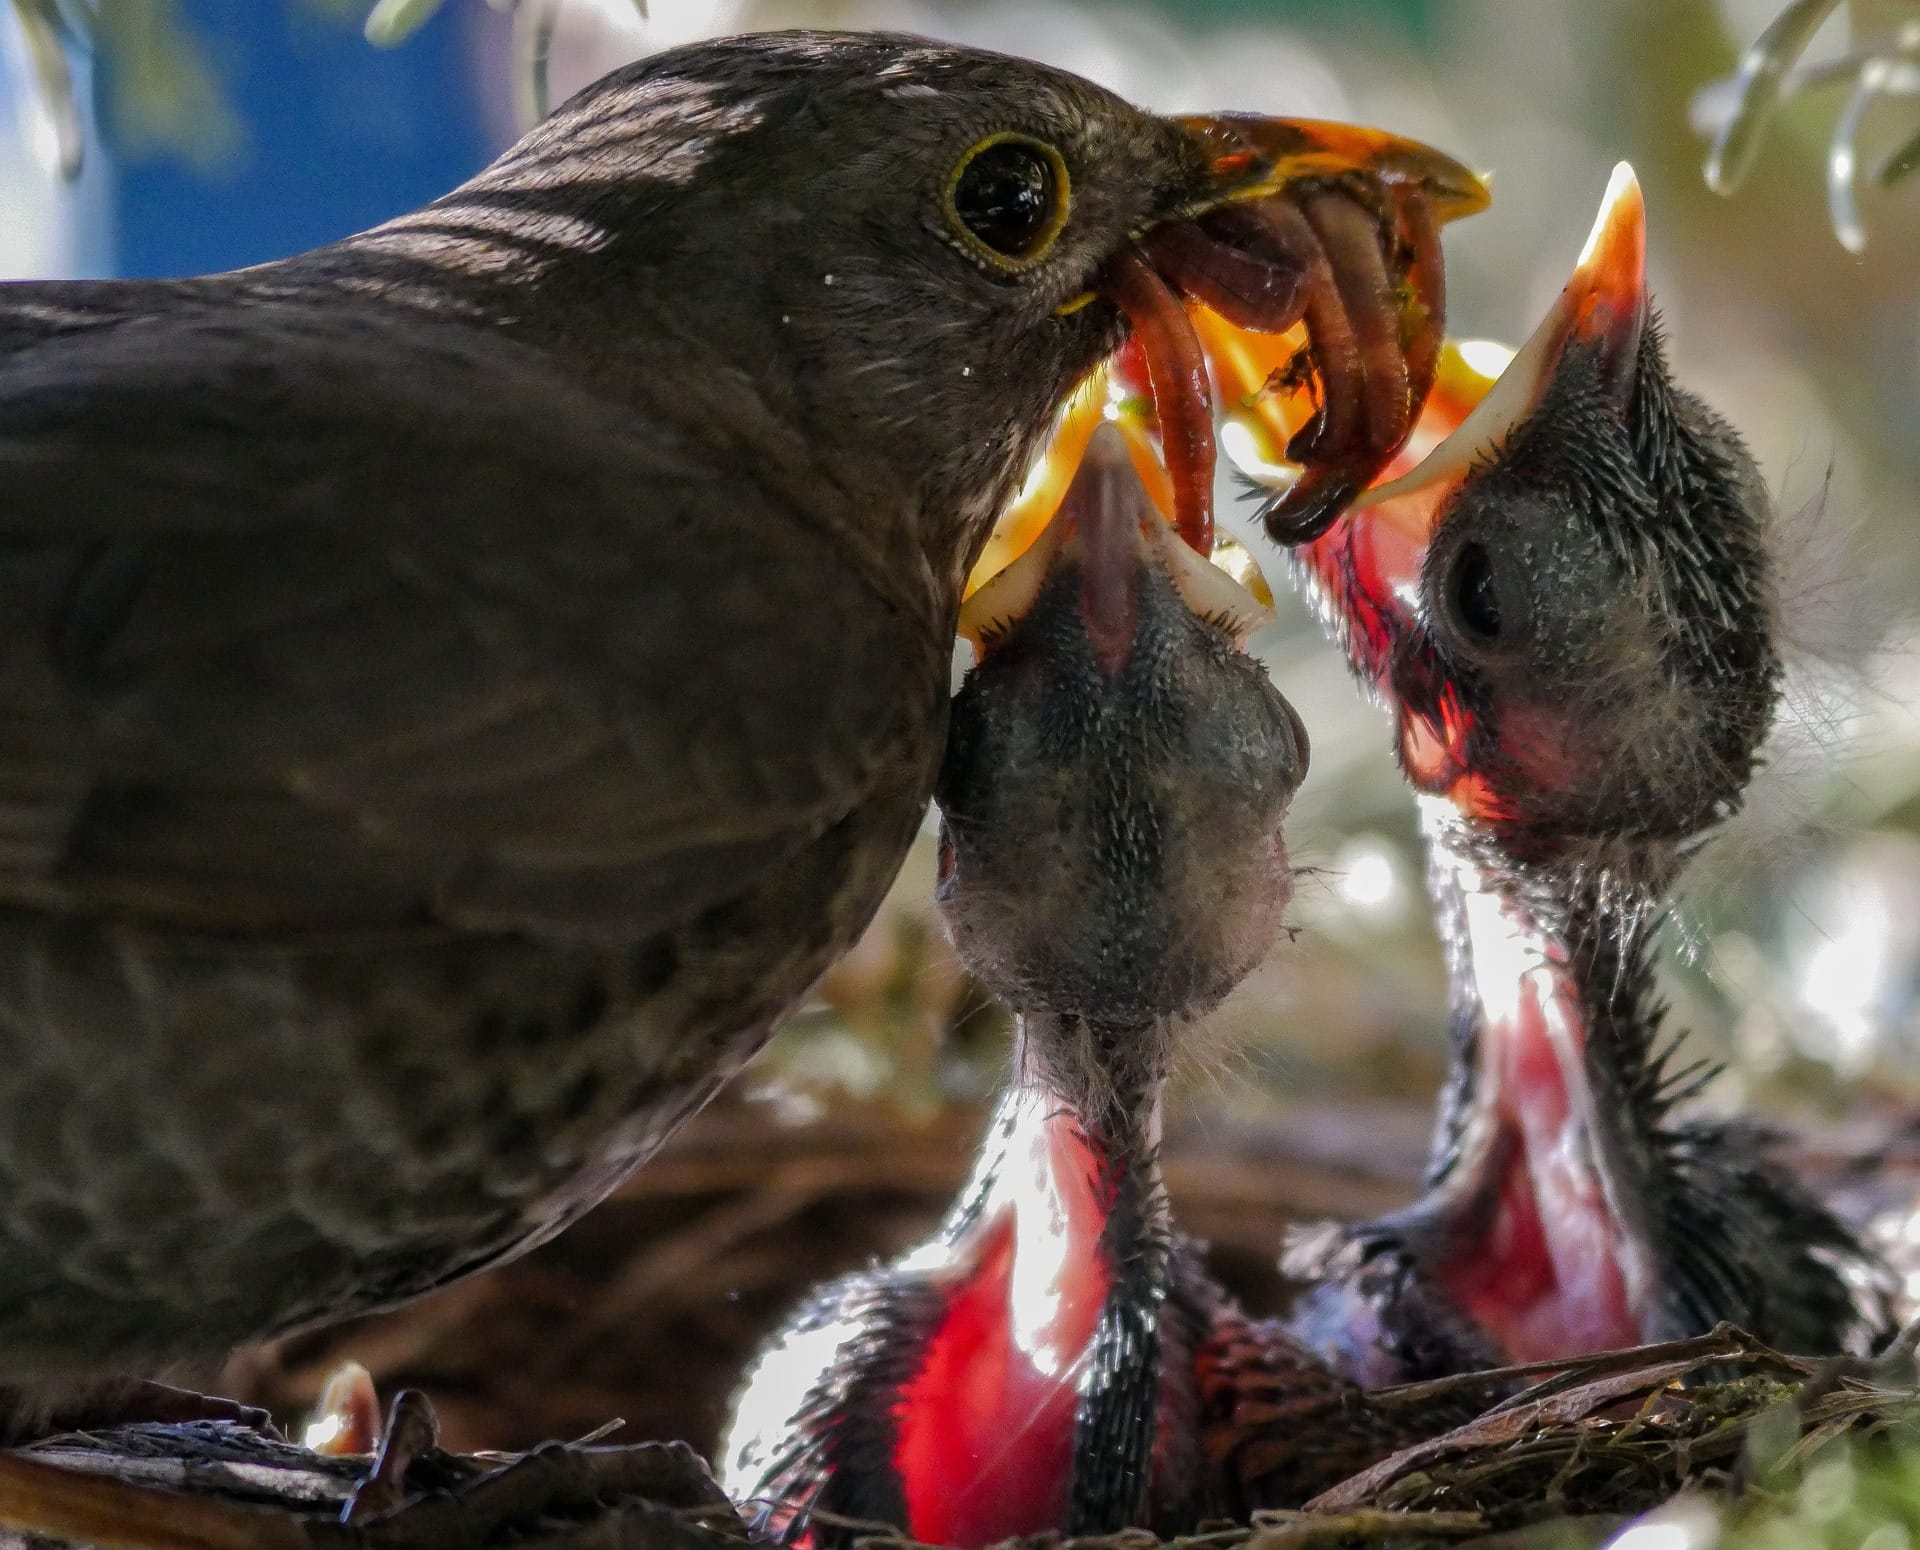 bird feeding worms to babies